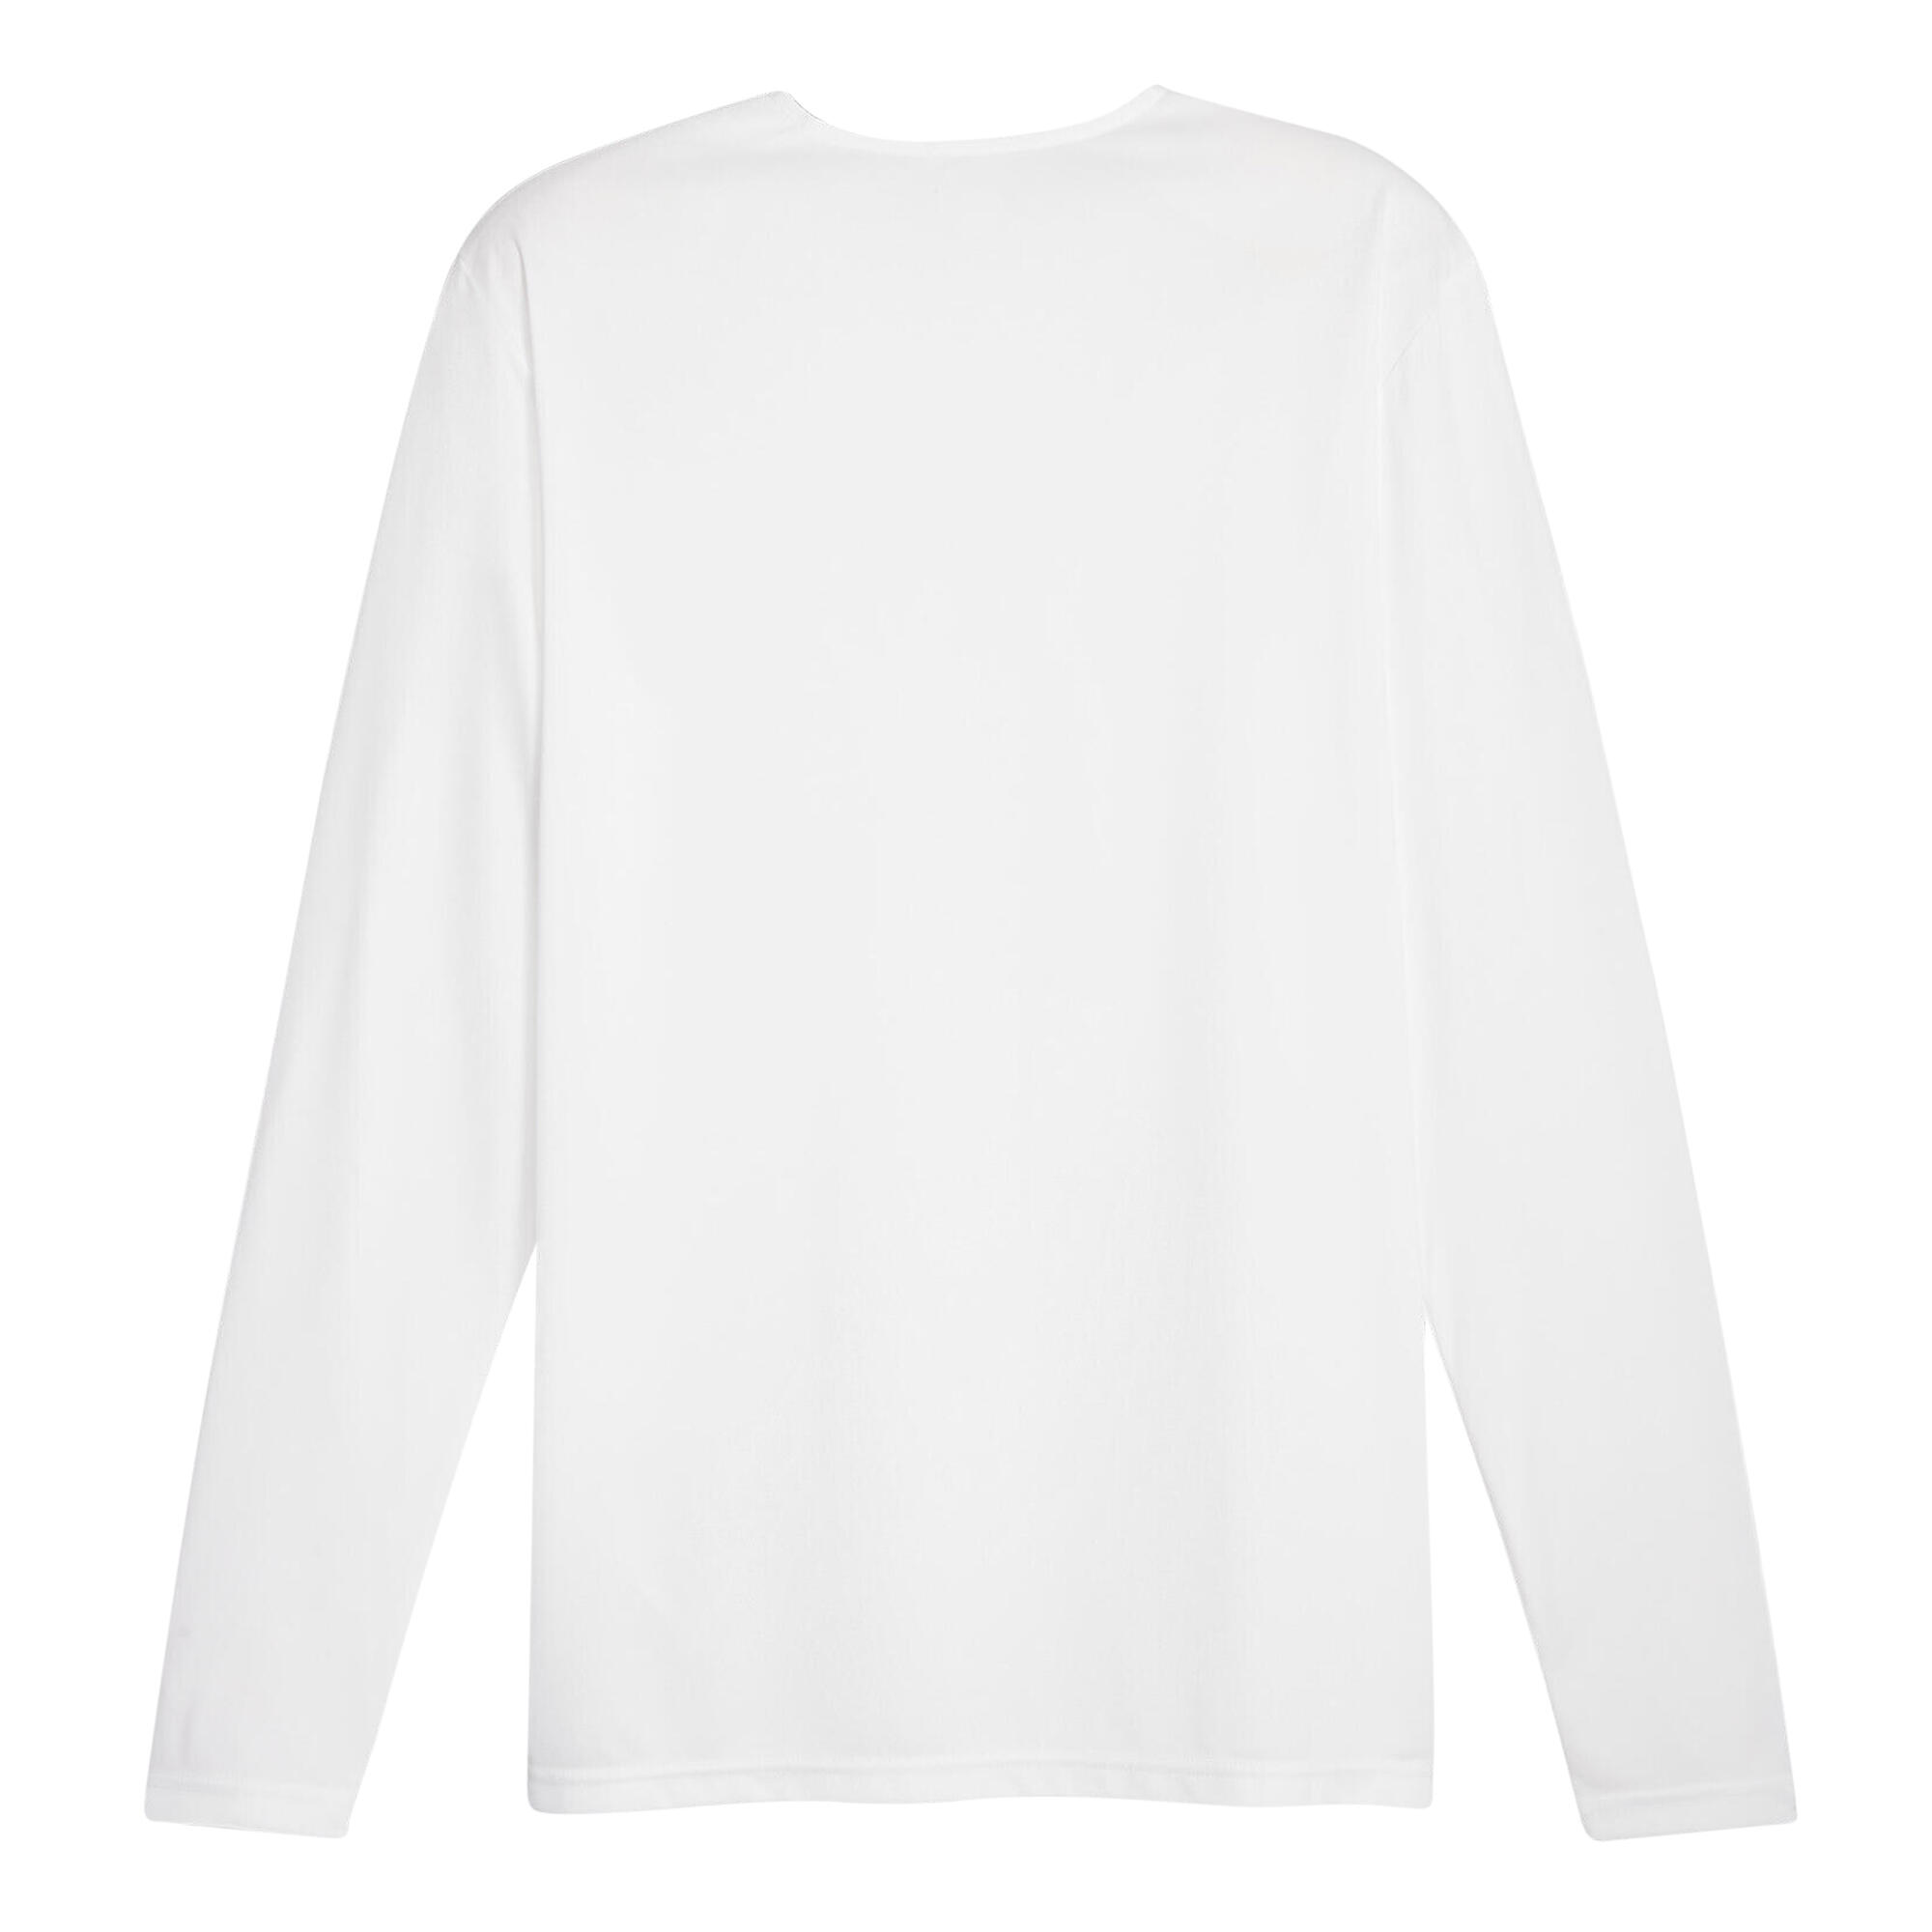 Mens Long Sleeve Shirt (White) 2/3